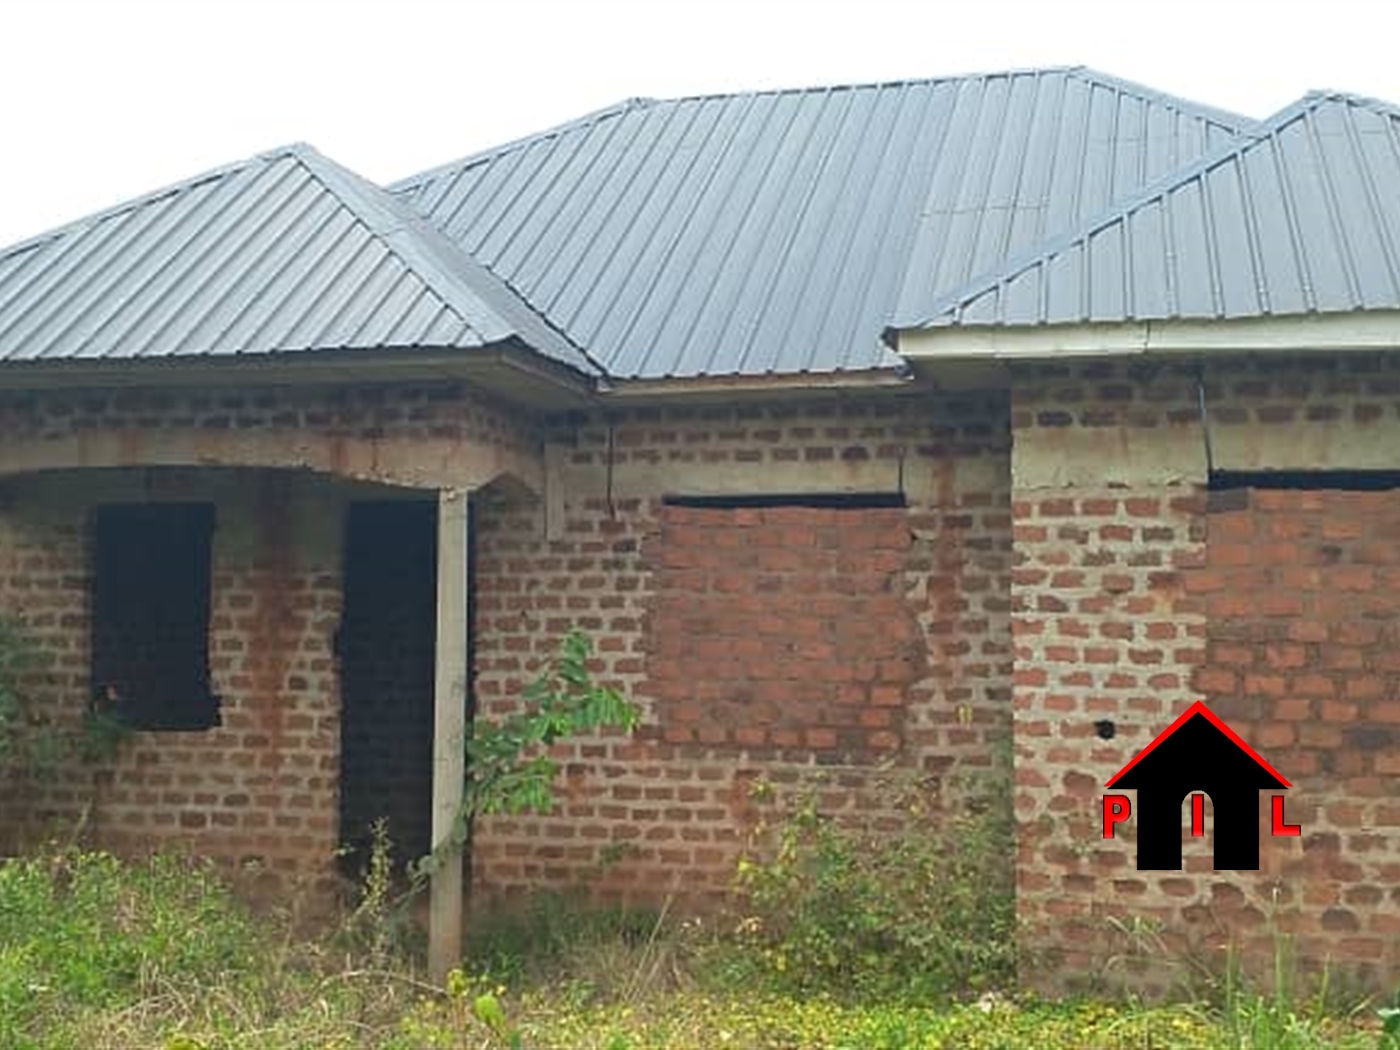 Shell House for sale in Kisowela Mukono